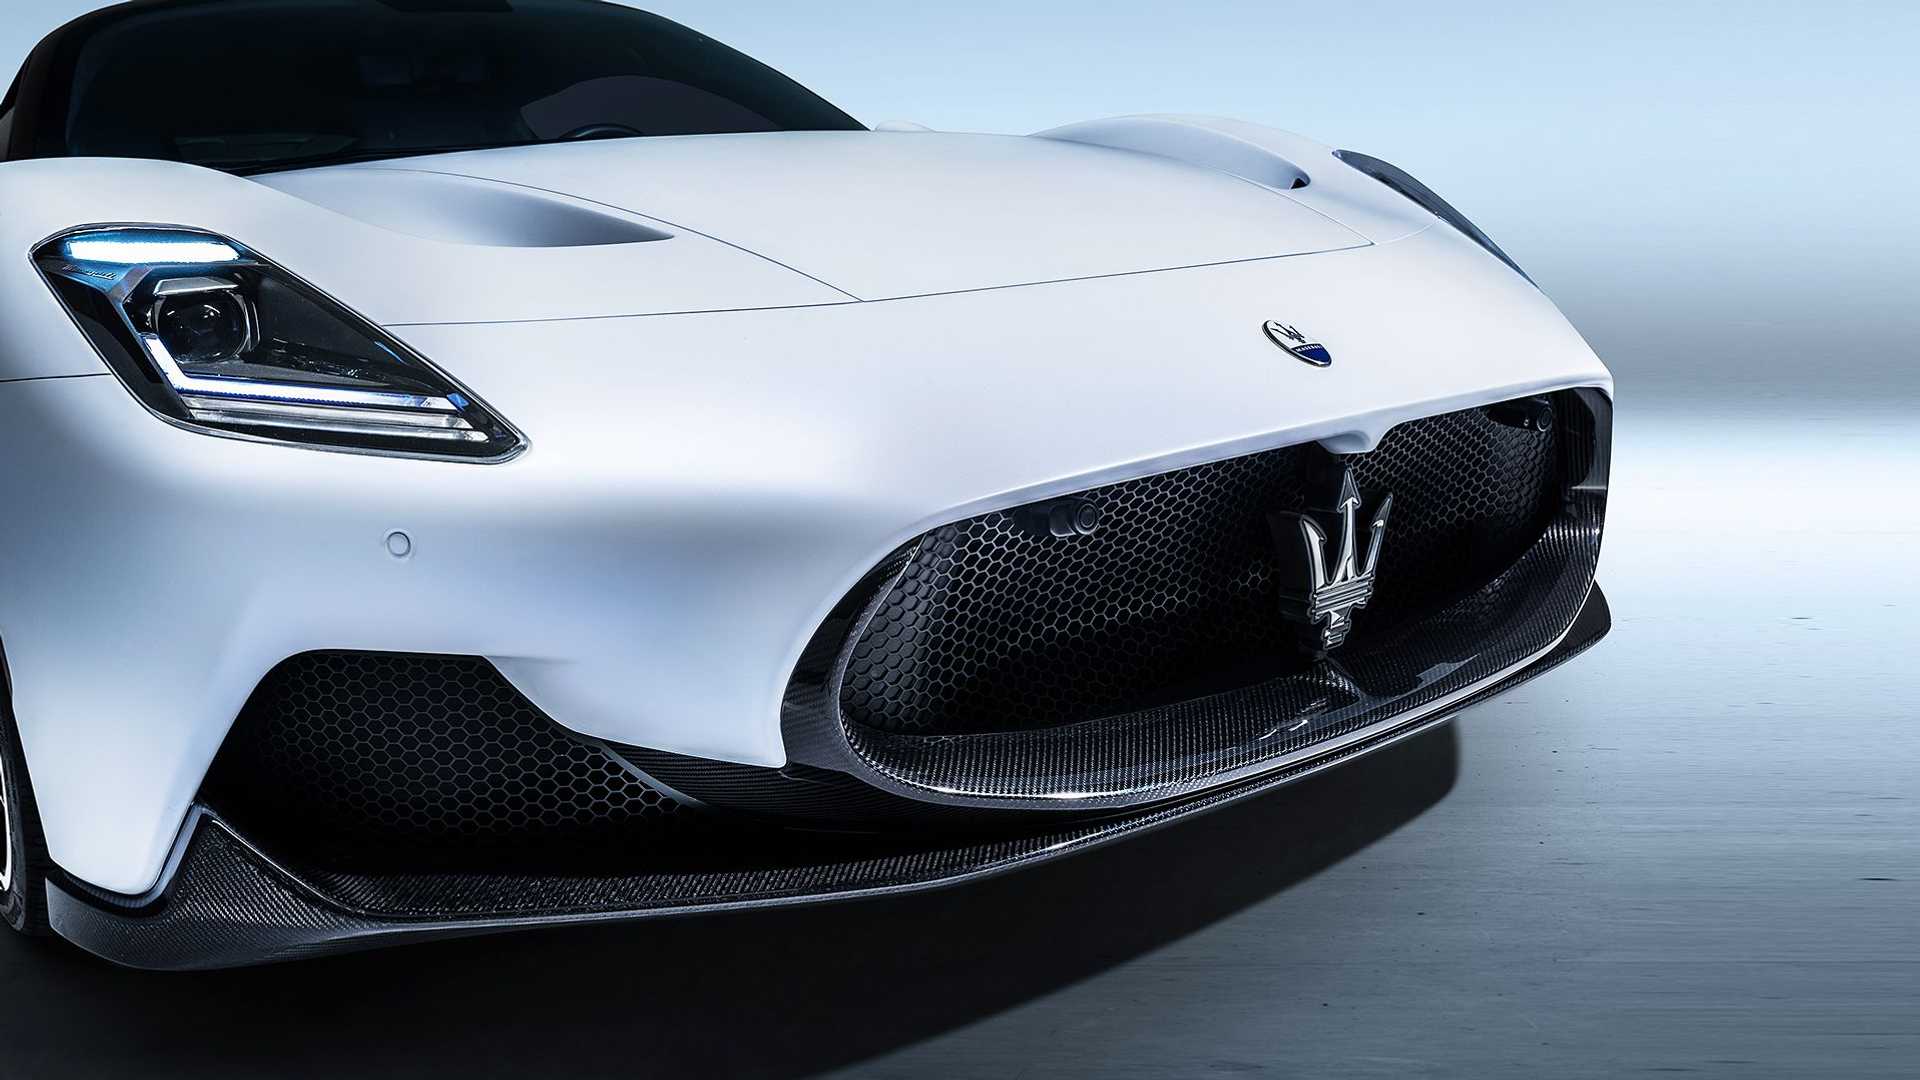 Maserati MC20 Fast Facts and Photo Gallery